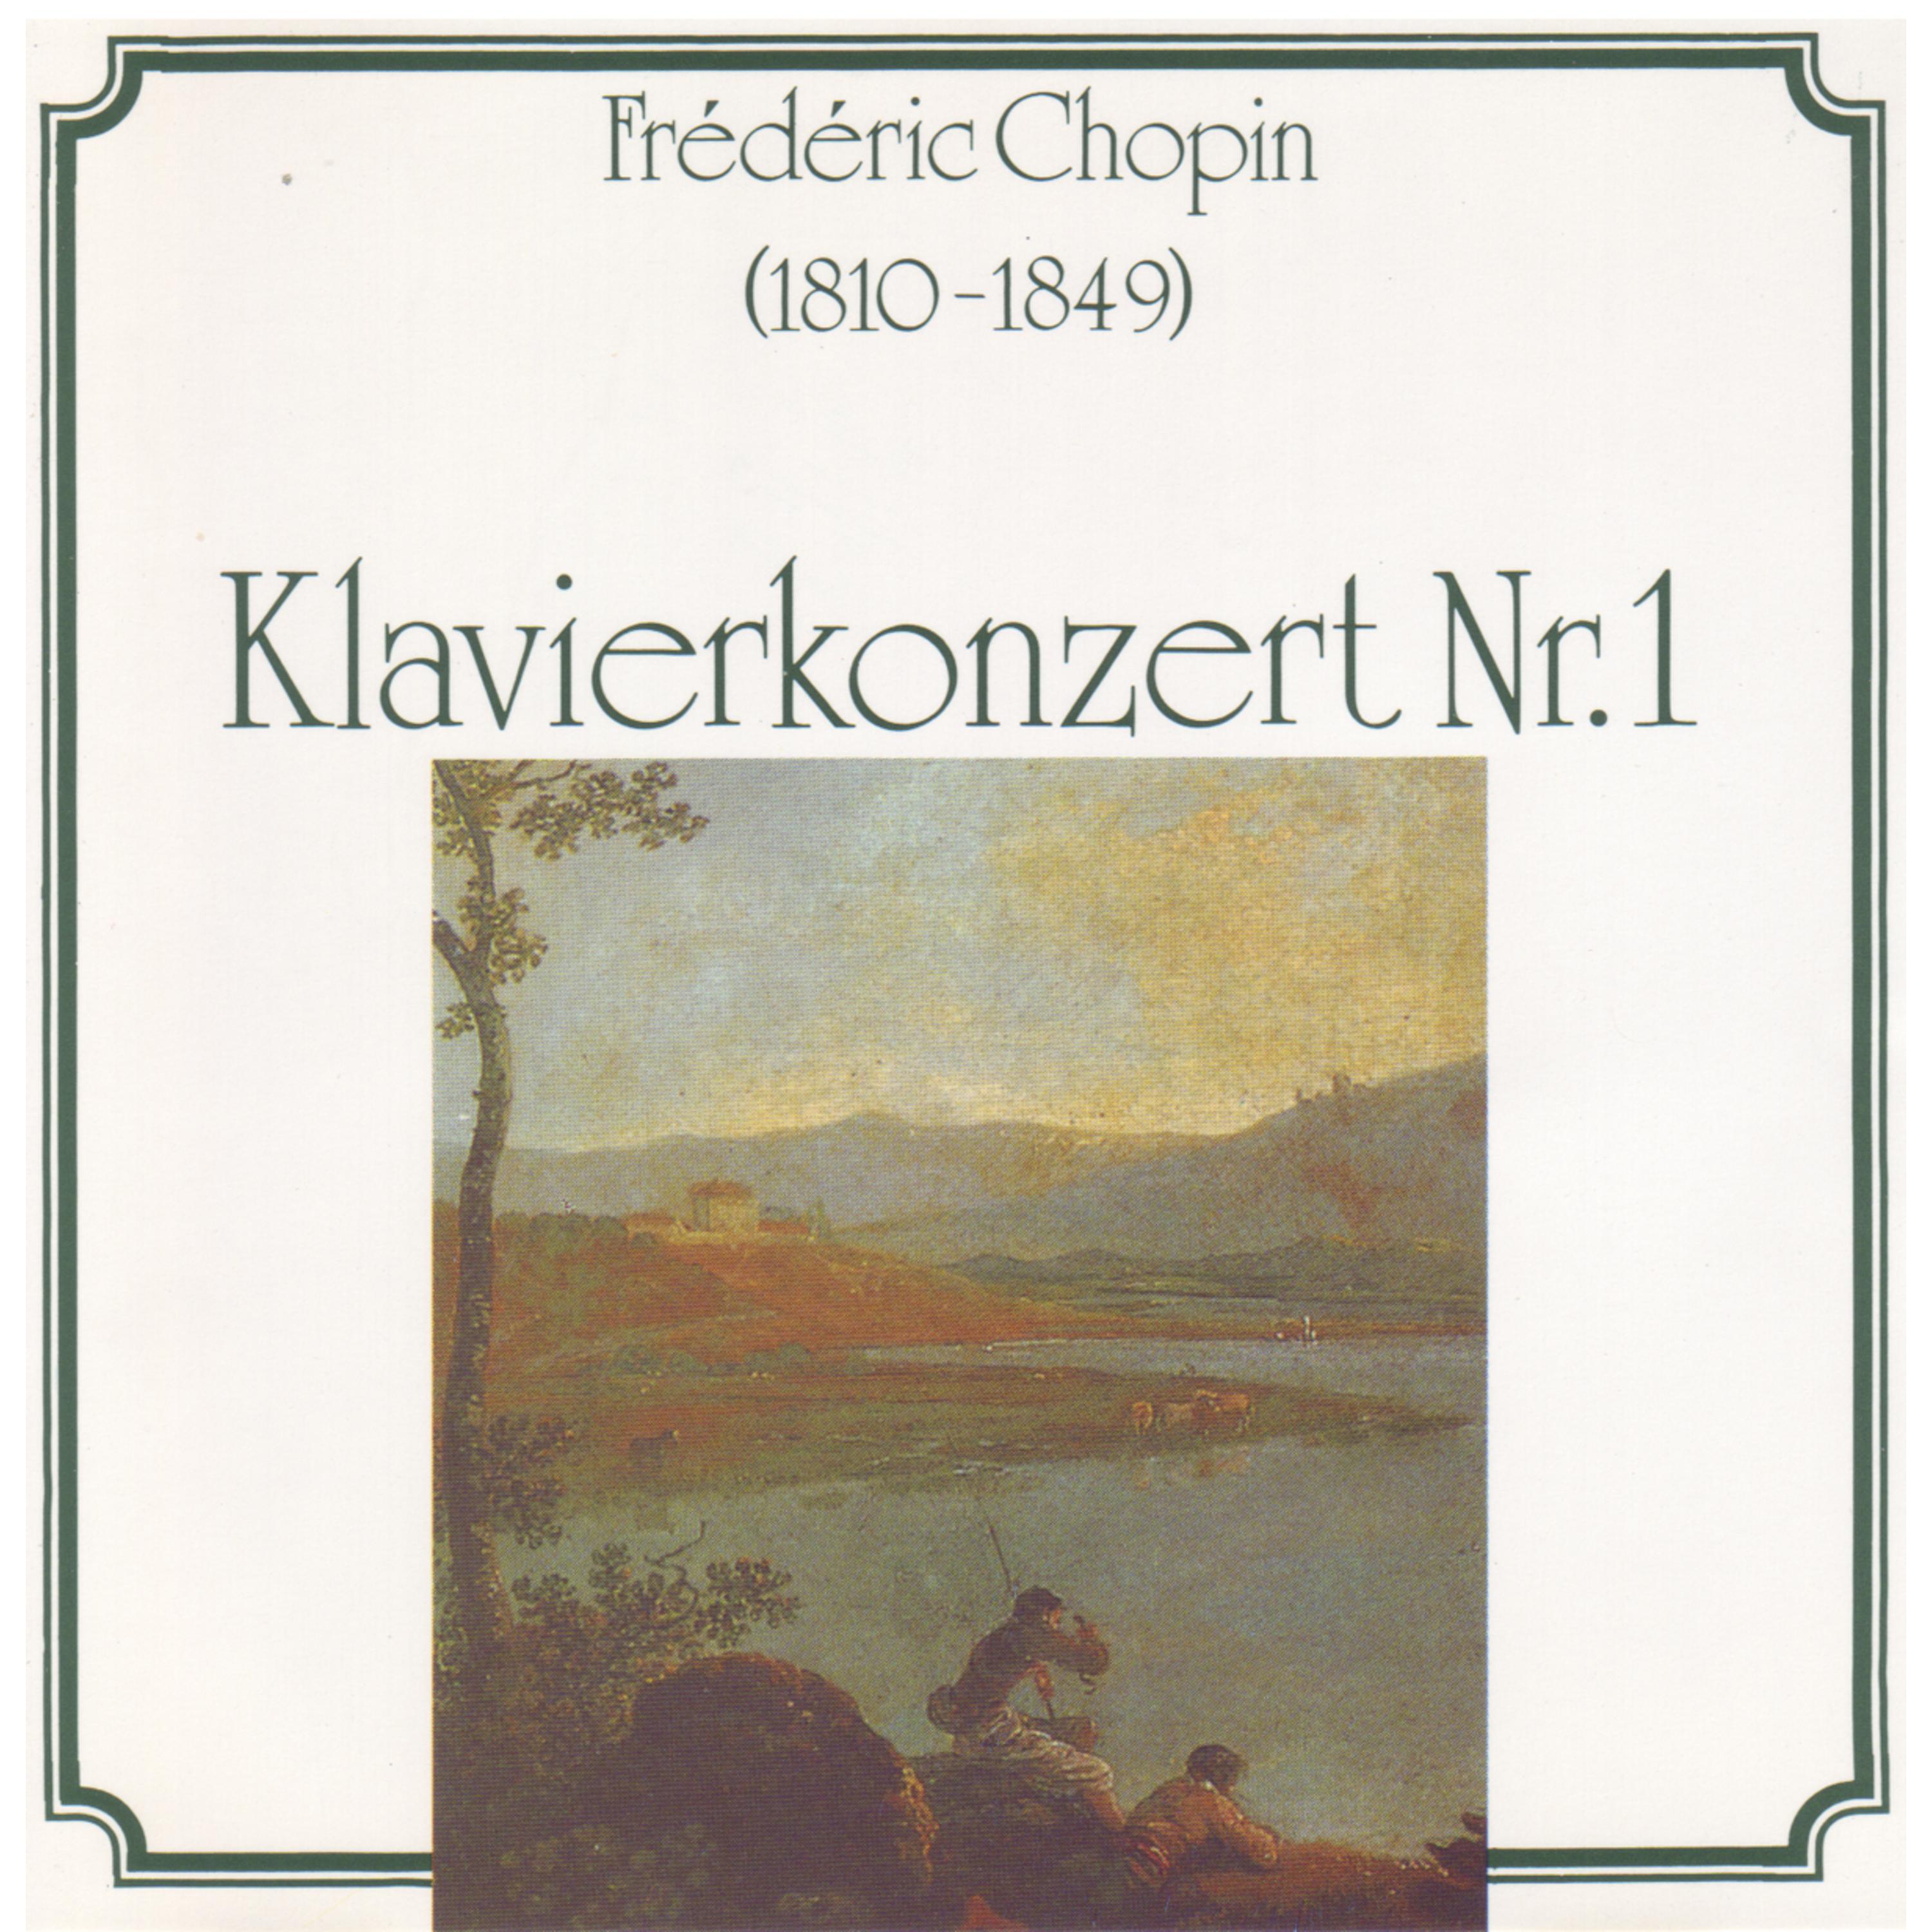 Pre lude fü r Klavier in AFlat Major, Op. 28, No. 17